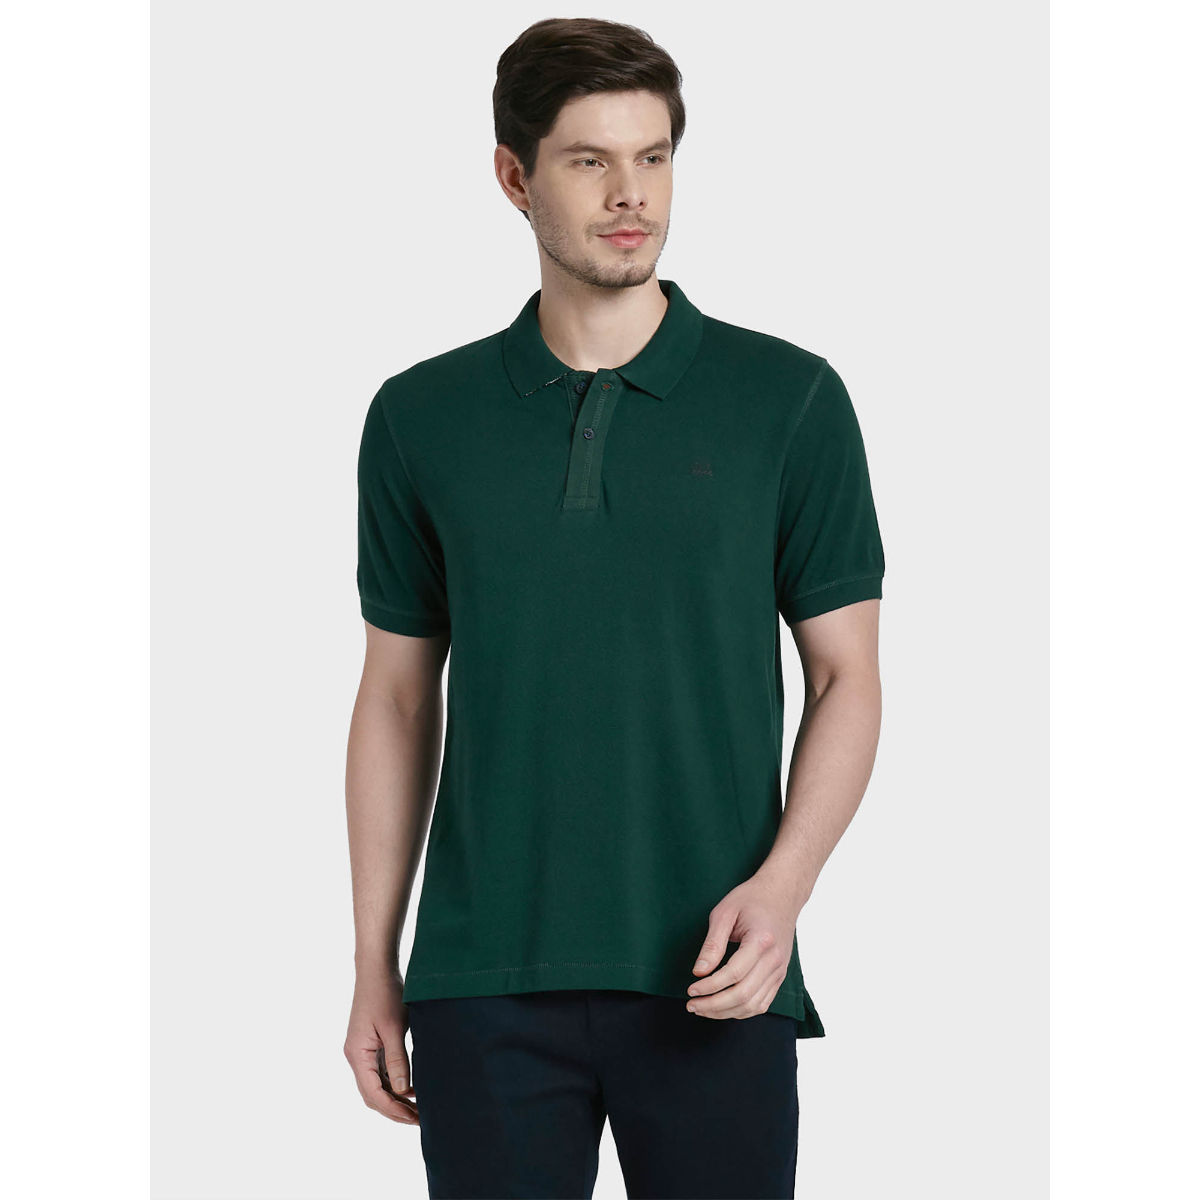 ColorPlus Dark Green Solid T-Shirt (M)